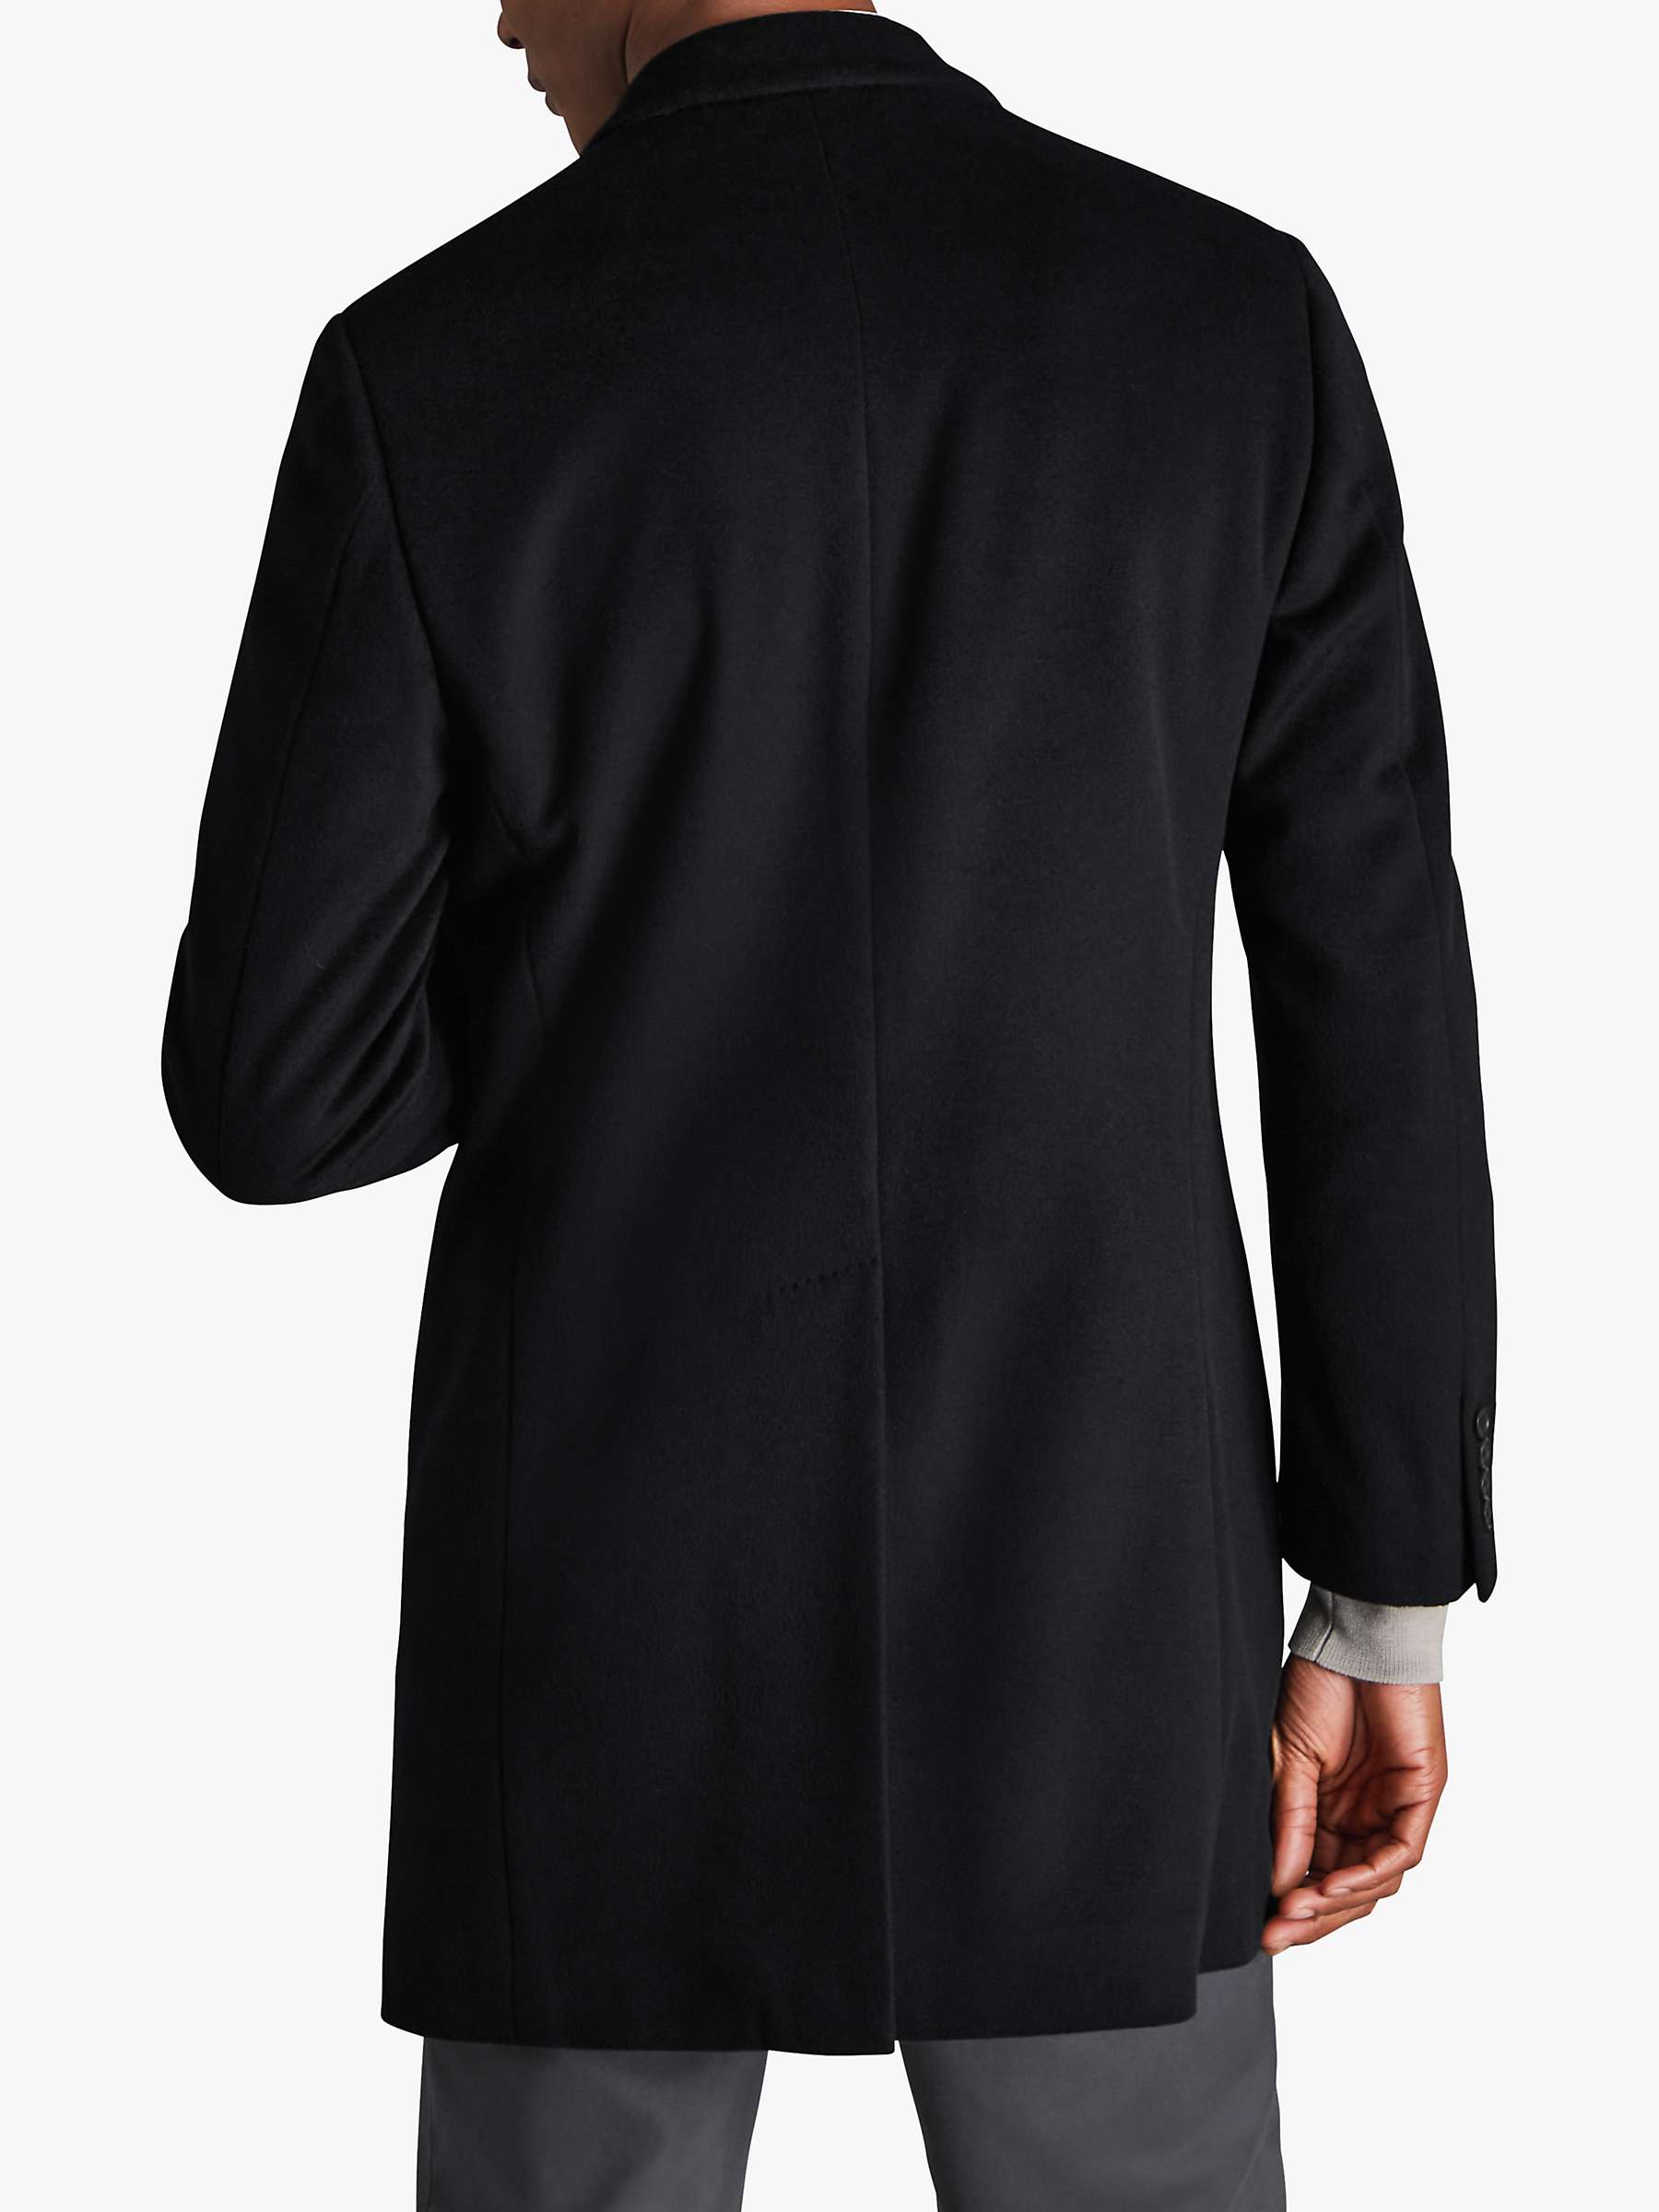 Buy Charles Tyrwhitt Merino Wool Overcoat Online at johnlewis.com